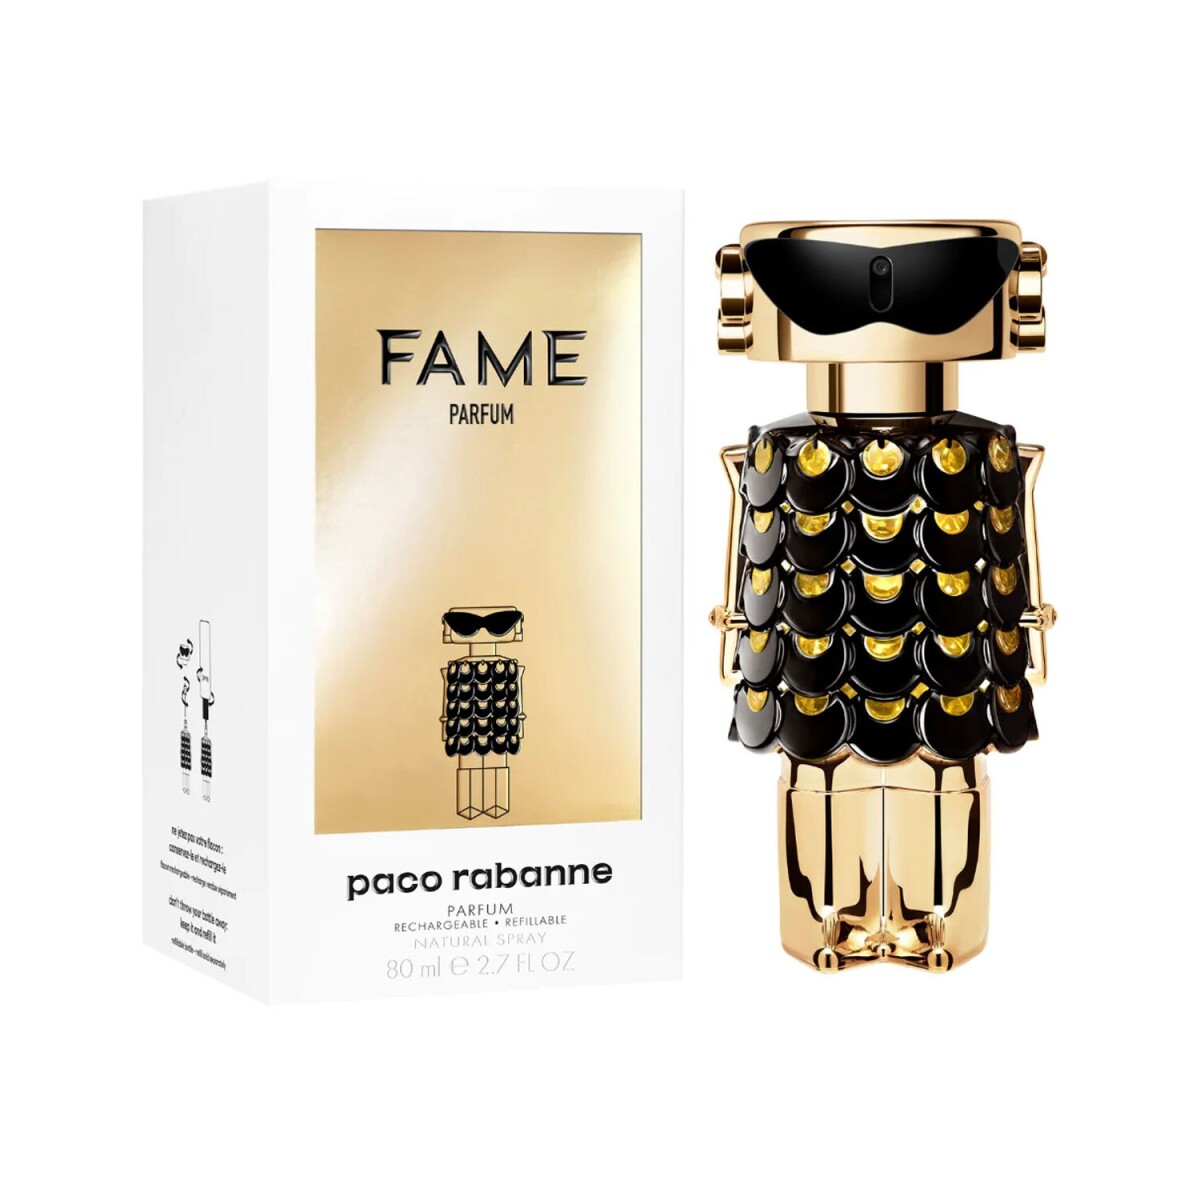 Perfume Paco Rabanne Fame Parfum 80ml Original 